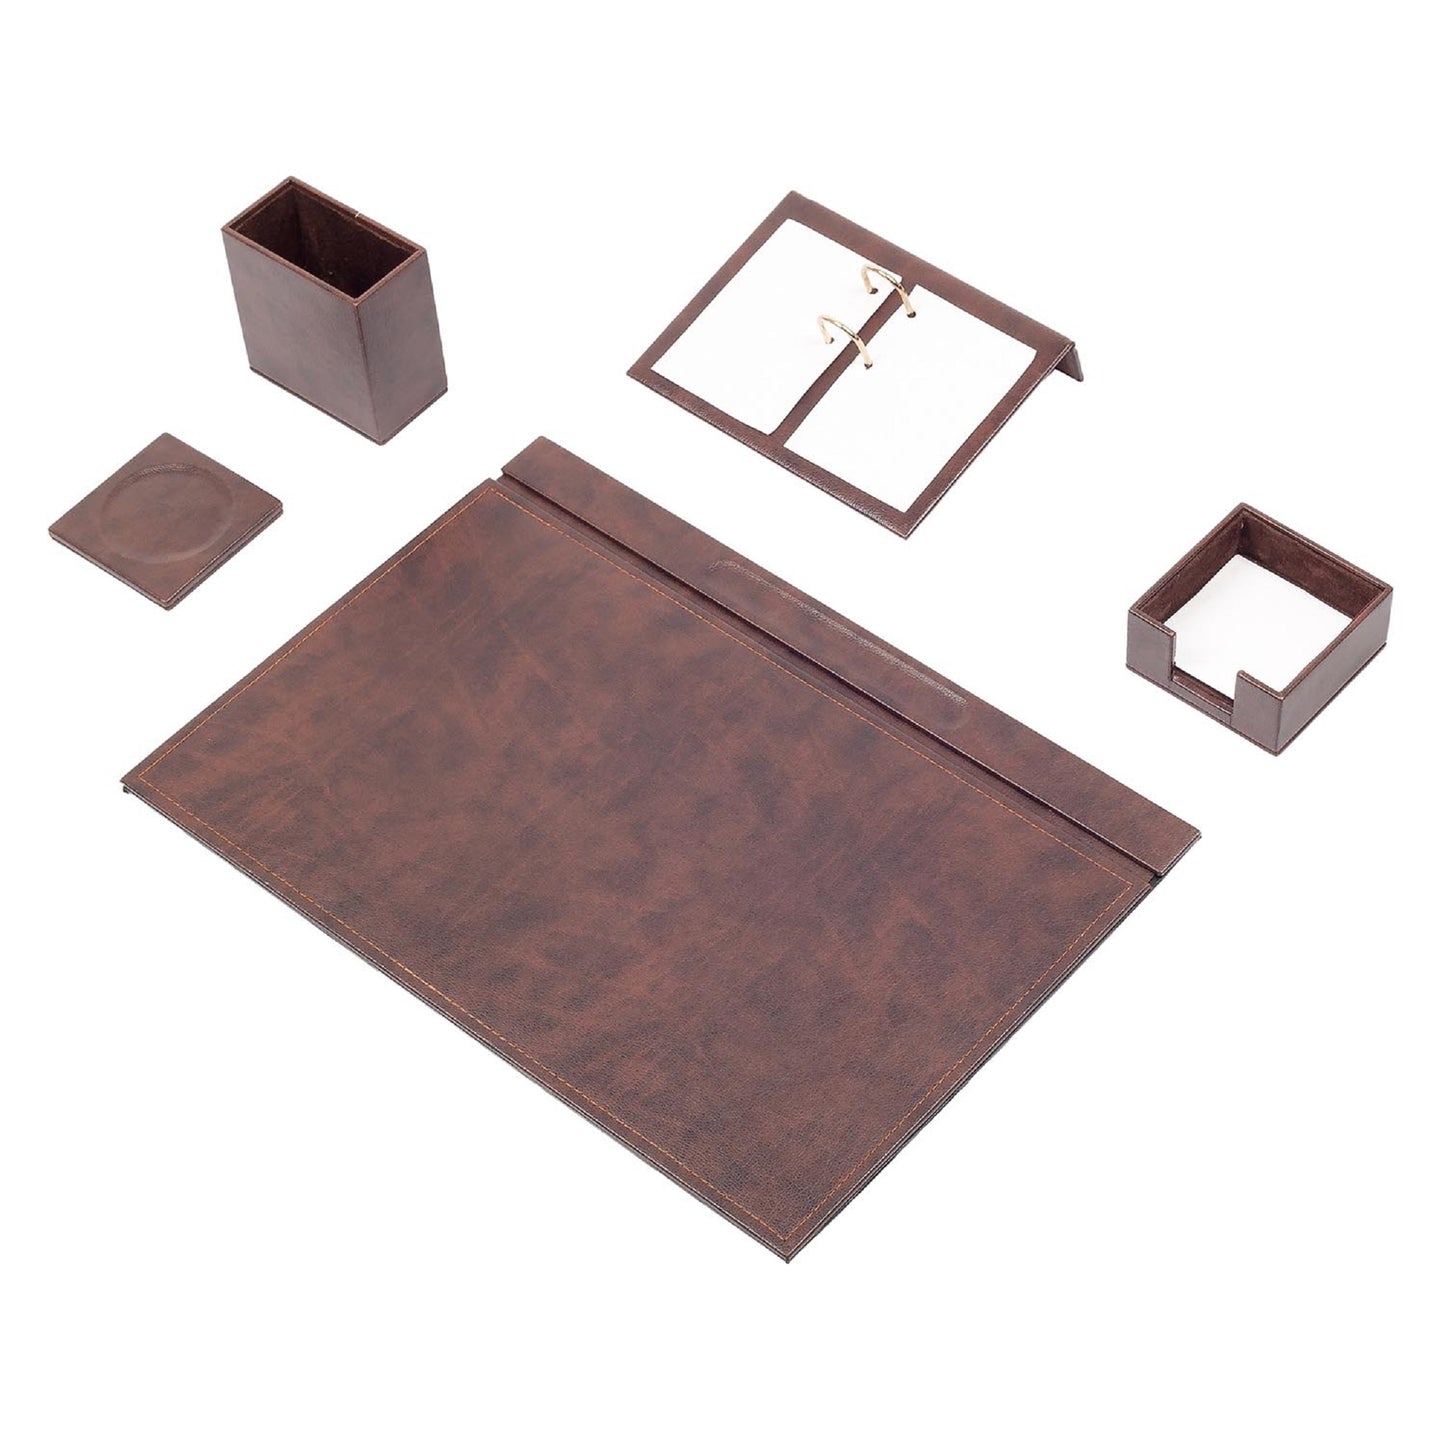 MOOG Leather Desk Set - Office Desk Organizer - Desk Storage - Leather Coaster - Desk accessories -  5 PCS